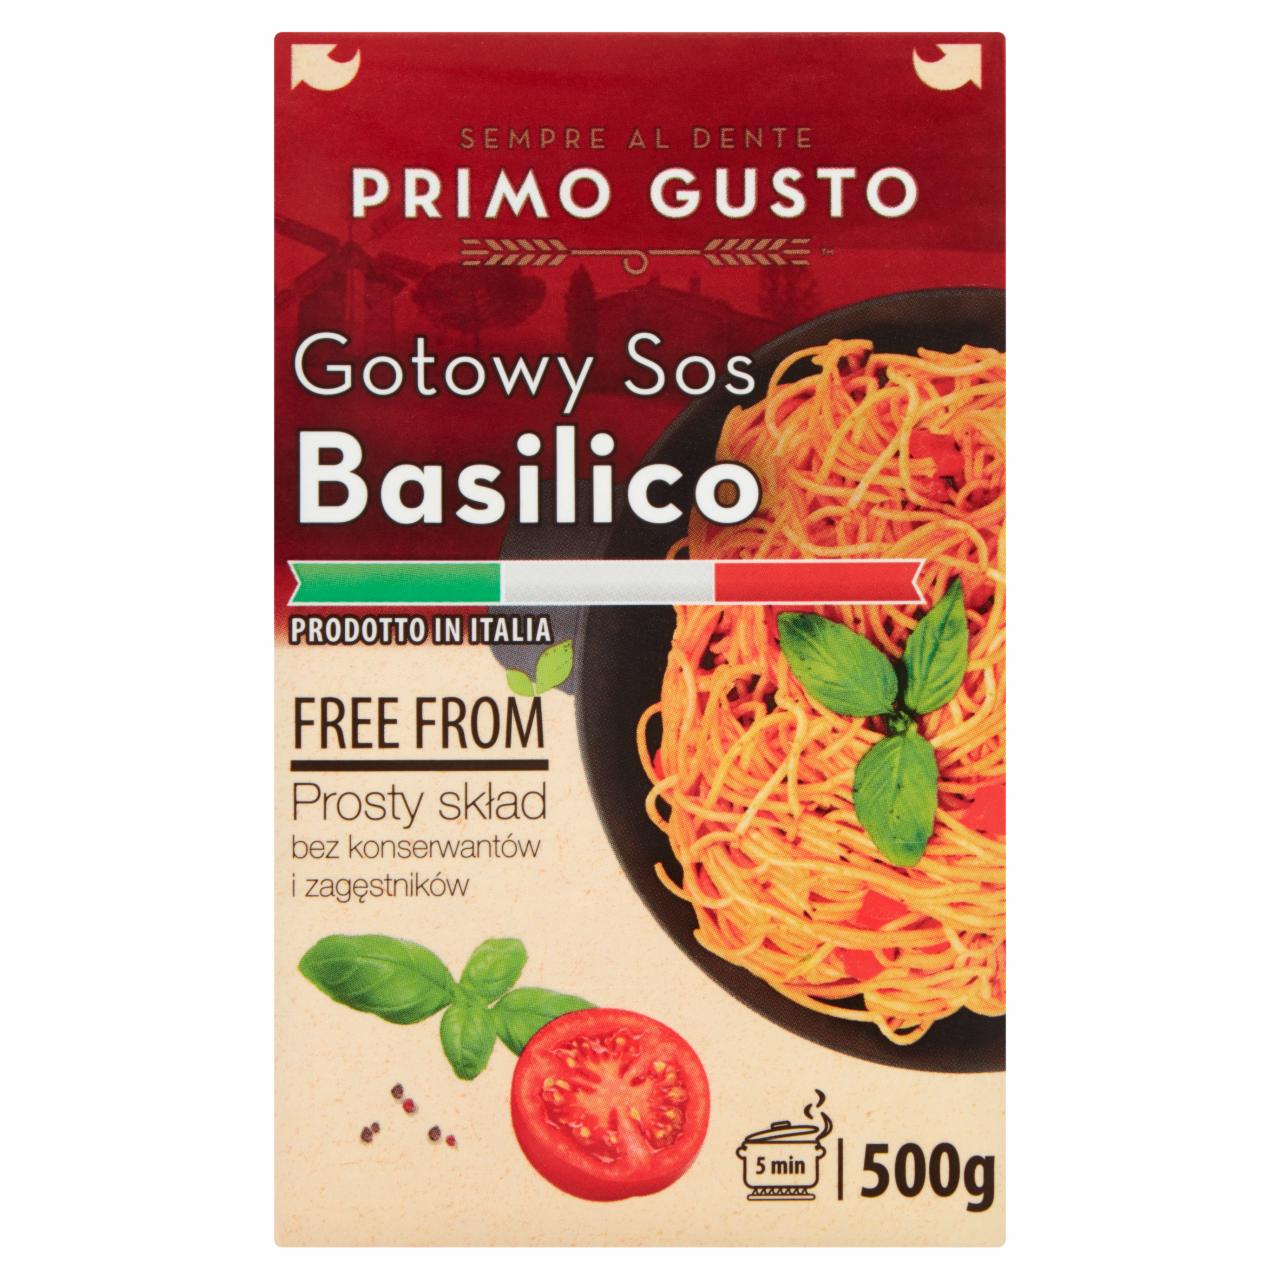 Zdjęcia - Primo Gusto Free From Prosty sos Basilico 500 g